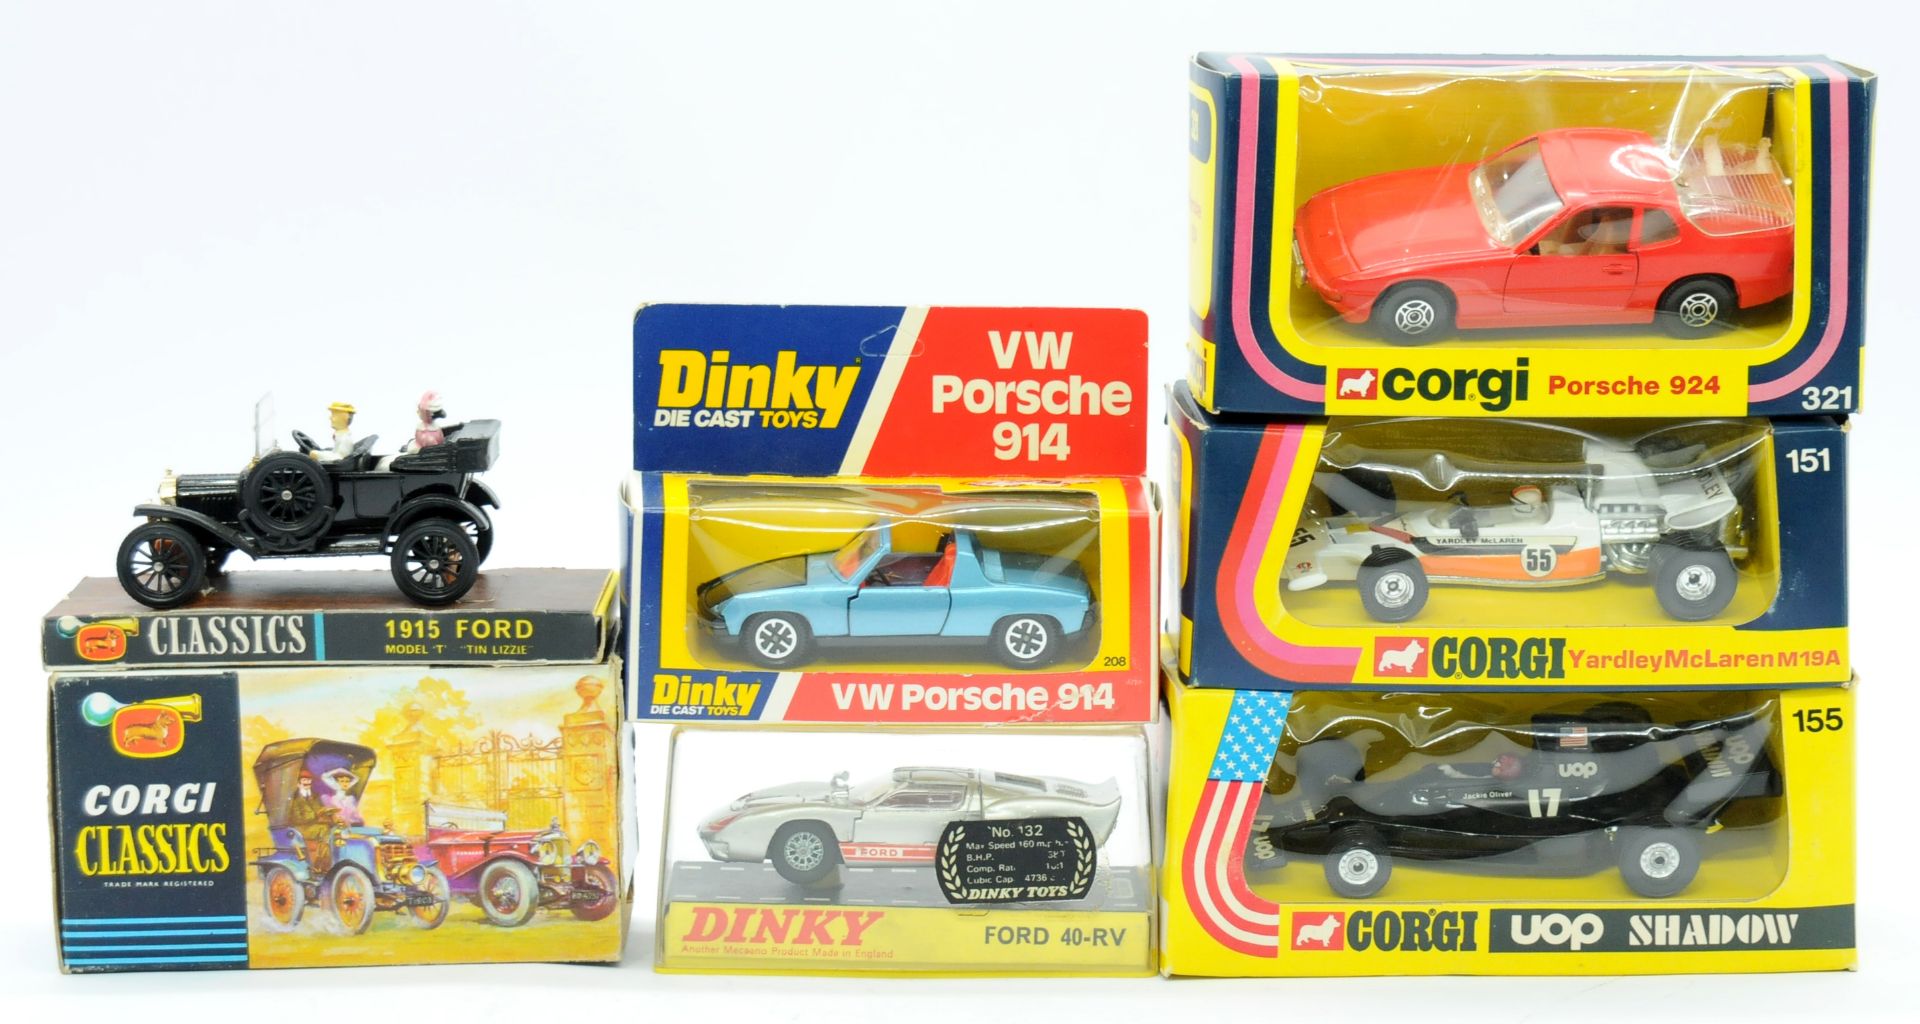 Corgi & Dinky a boxed group of models